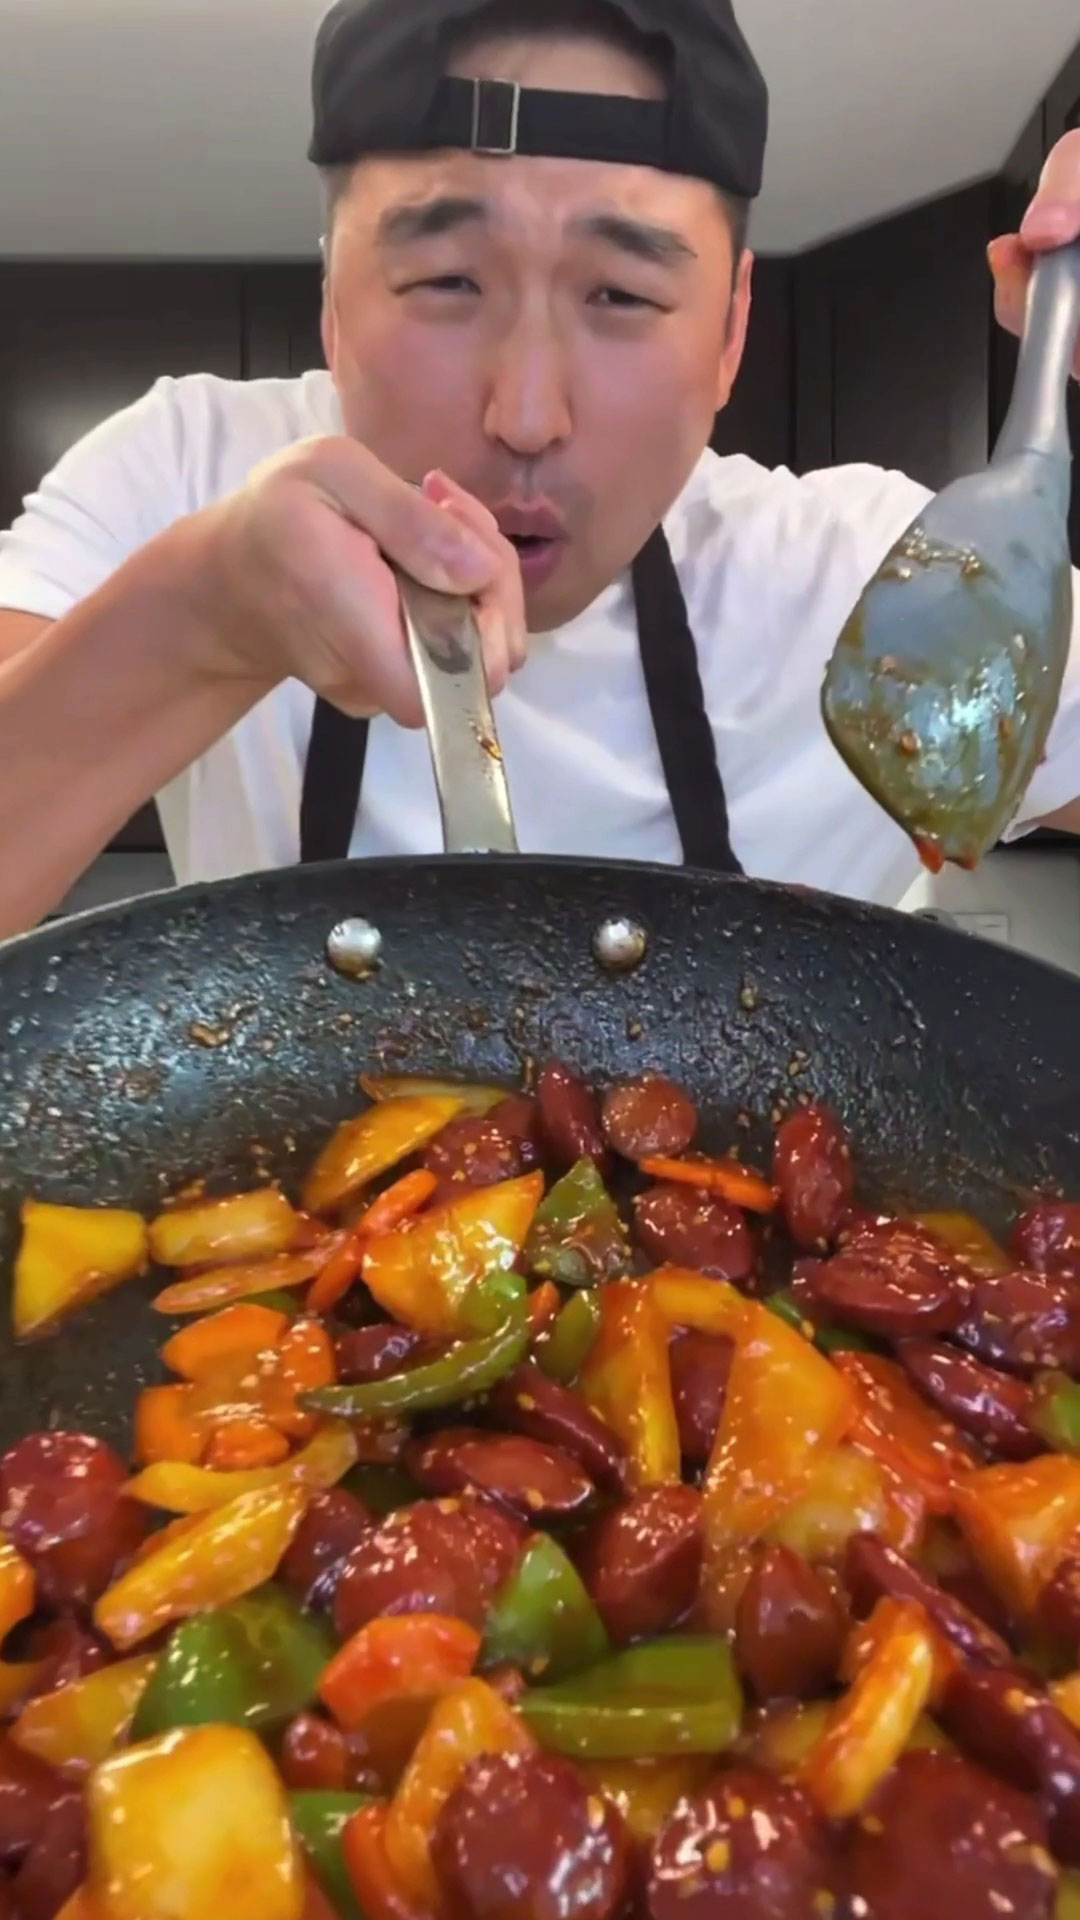 How to Stir-Fry Like a Restaurant Chef